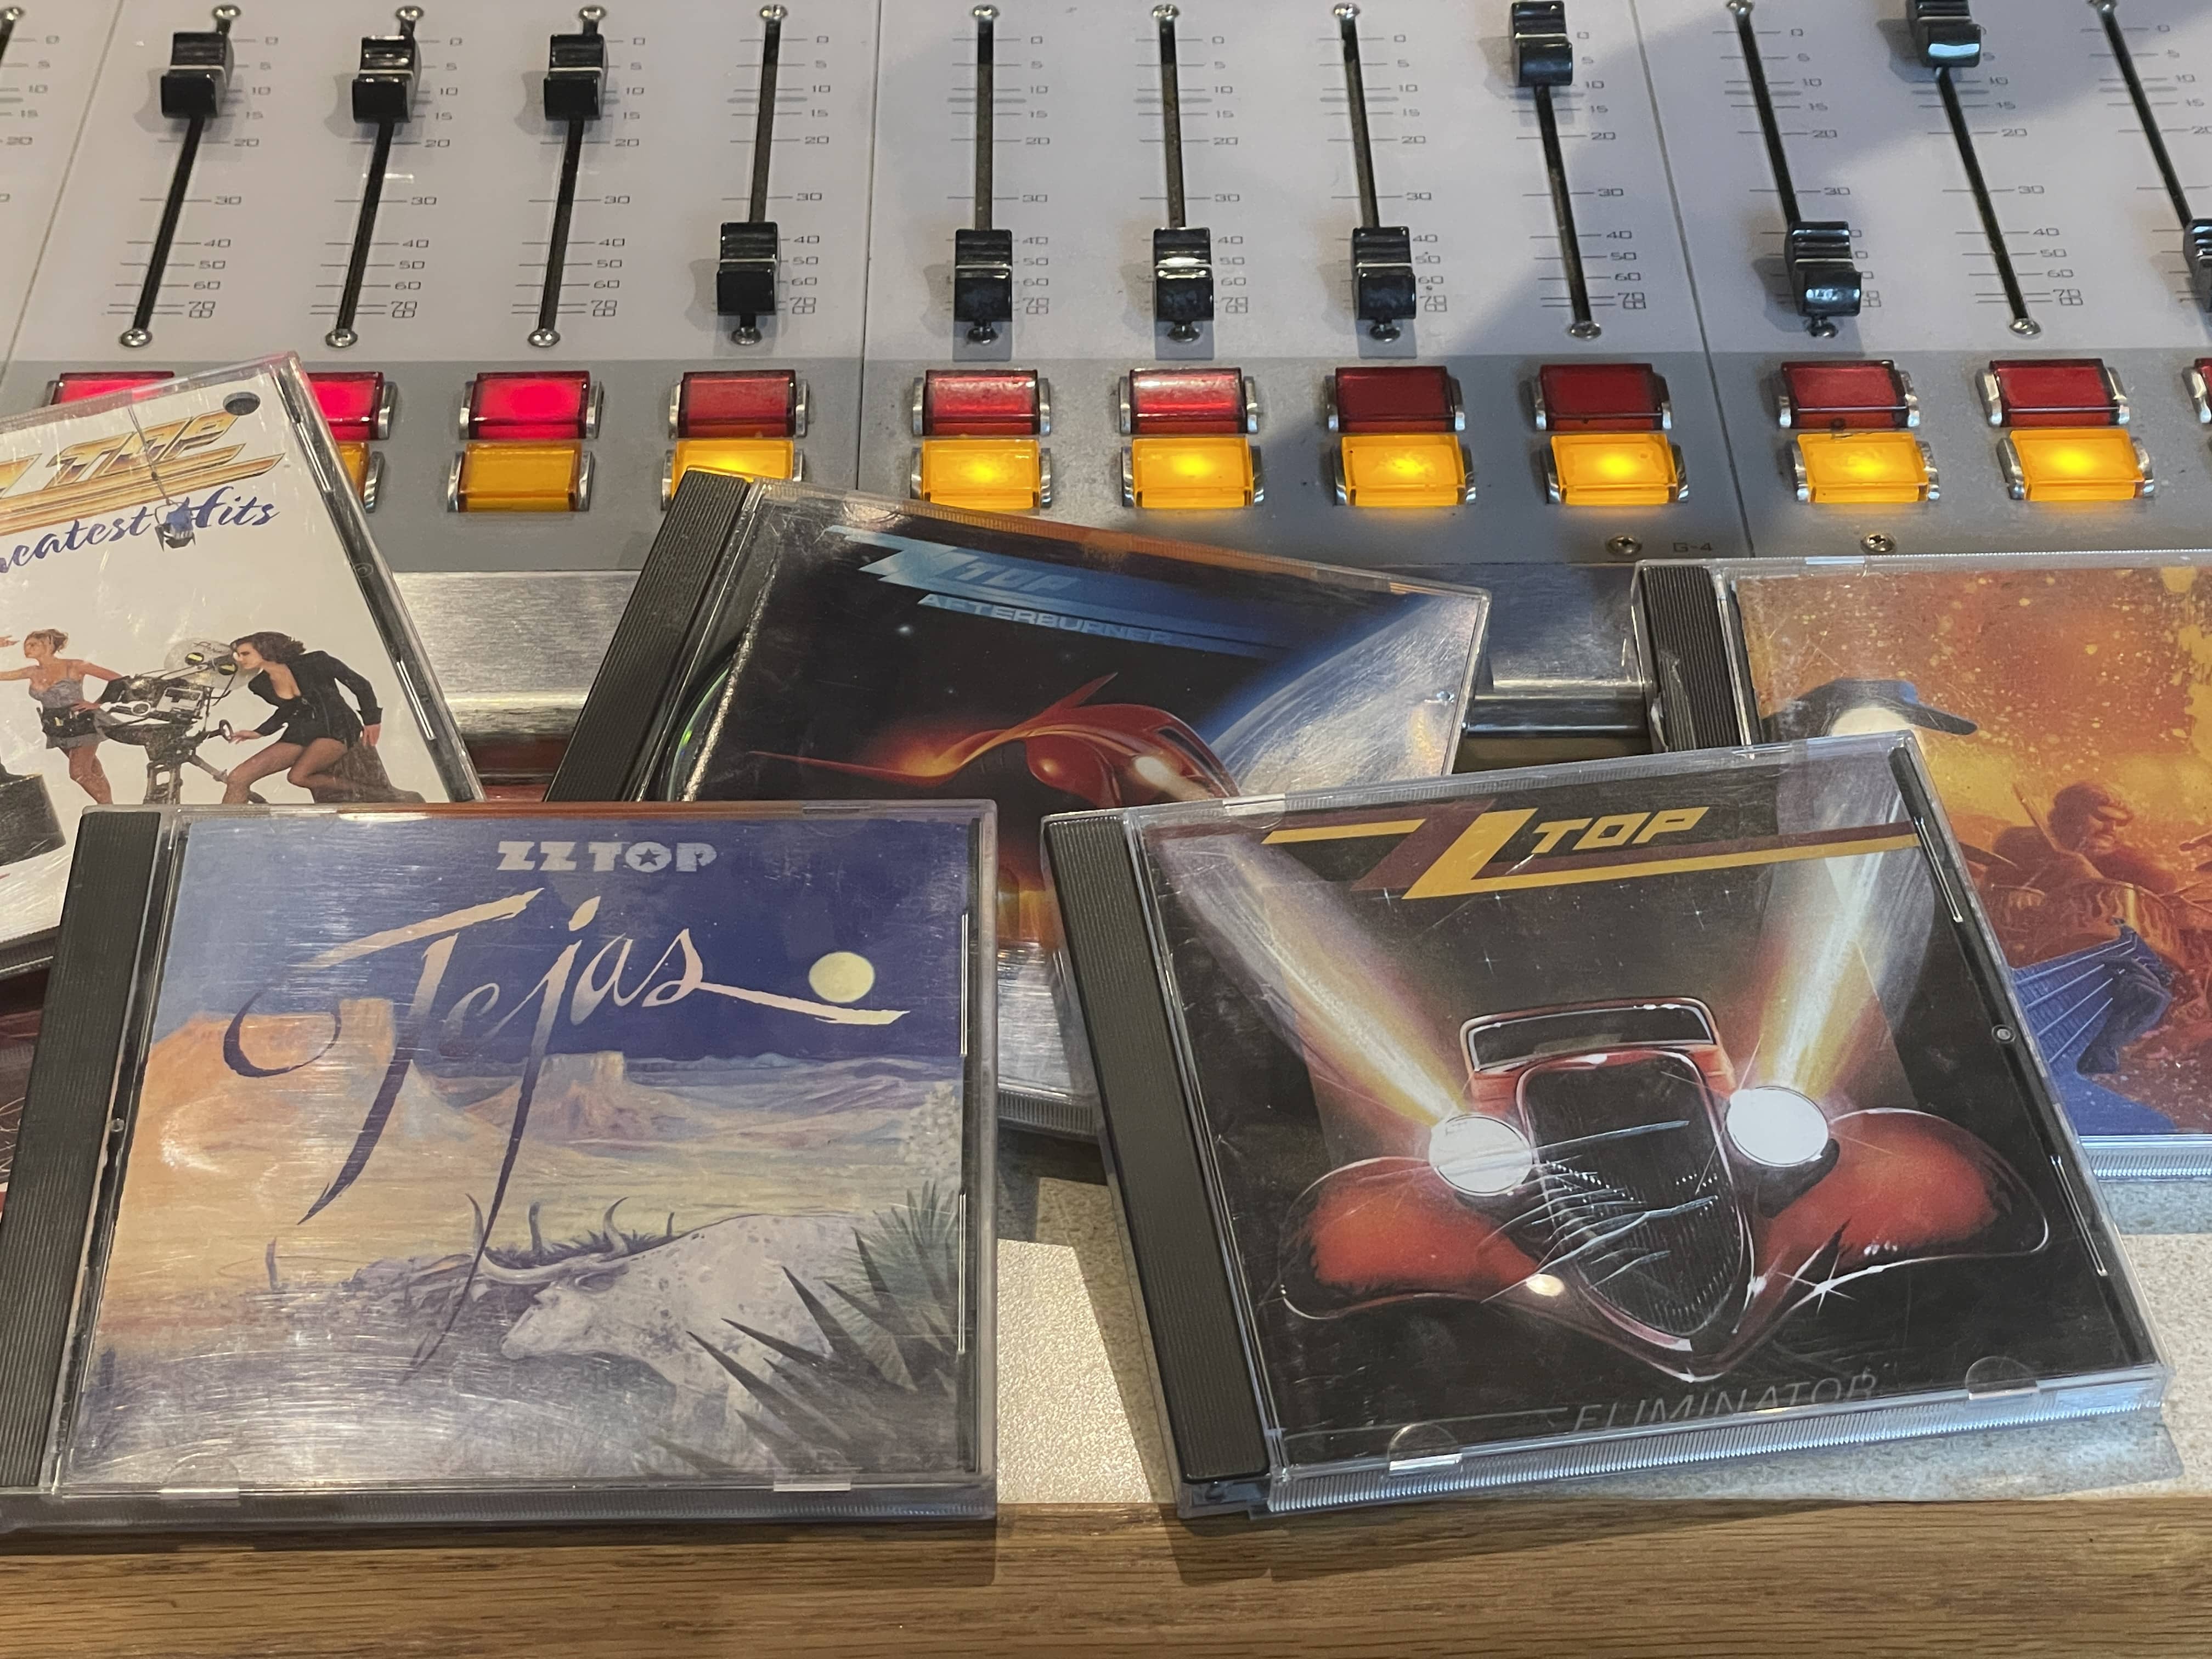 ZZ Top CD's from the KLBJ-FM Studio